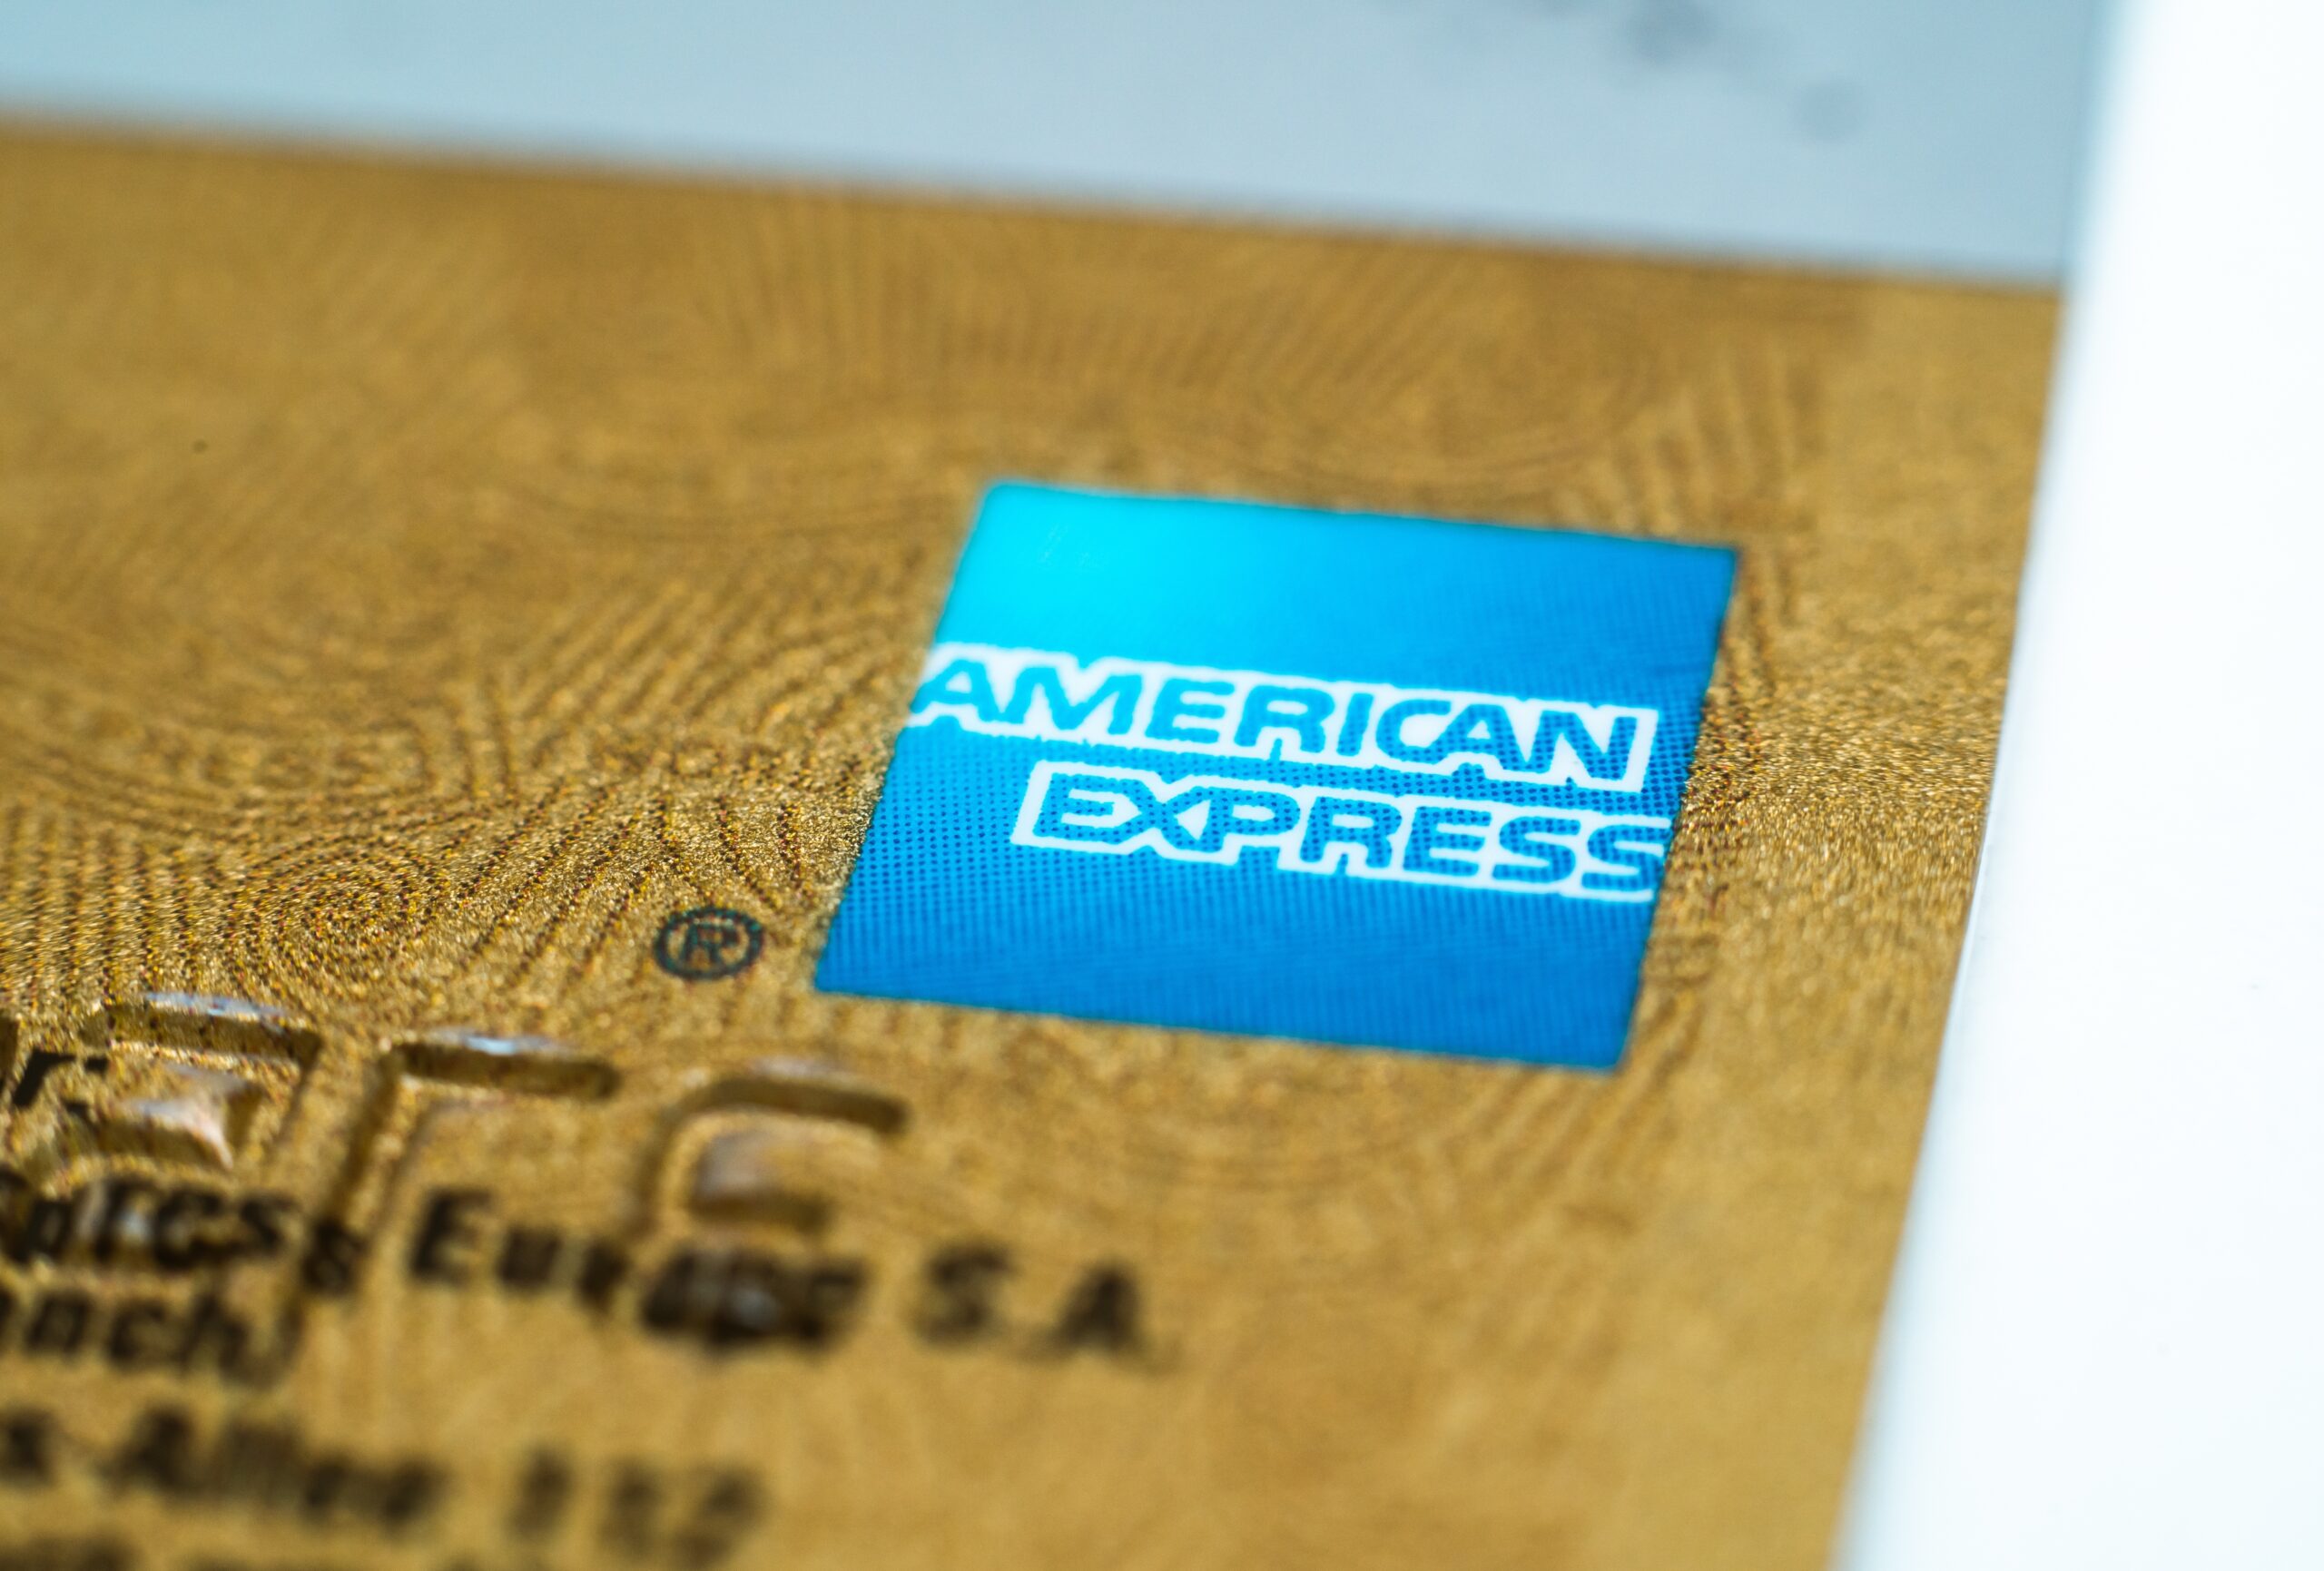 MUNICH, GERMANY - Apr 29, 2020: Closeup of an Amex credit card. American Express gold card.